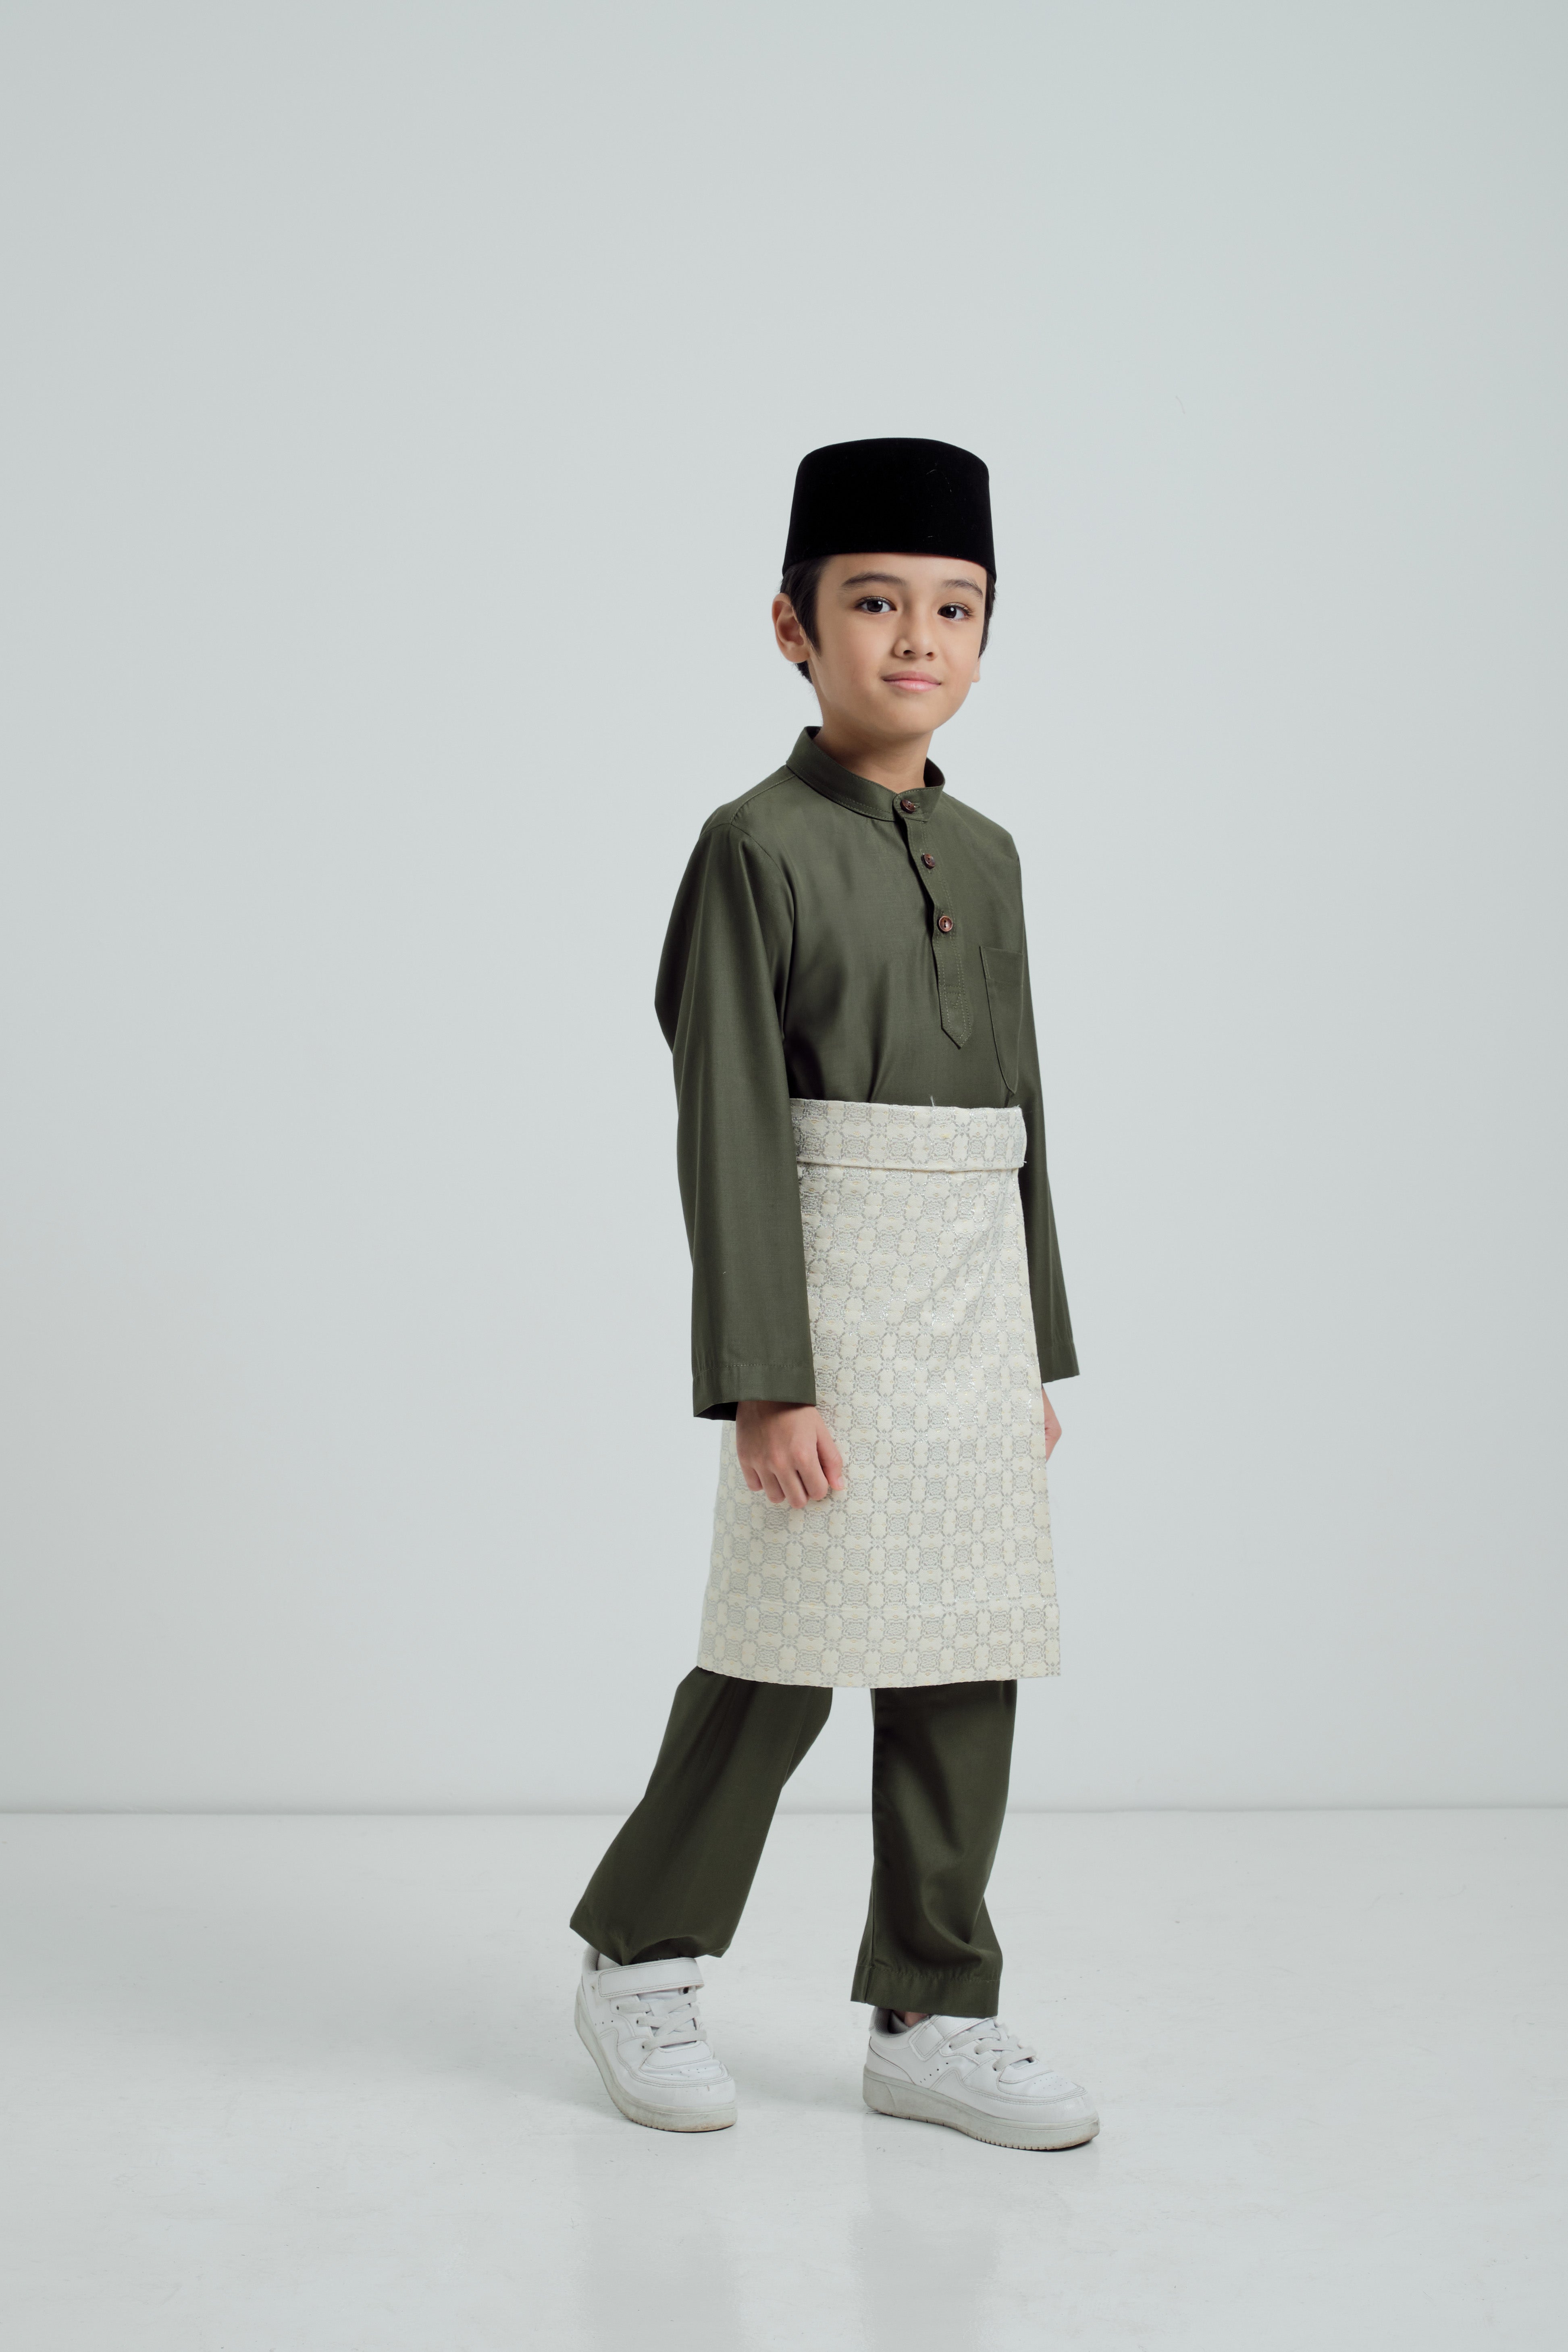 Patawali Boys Baju Melayu Cekak Musang - Army Green